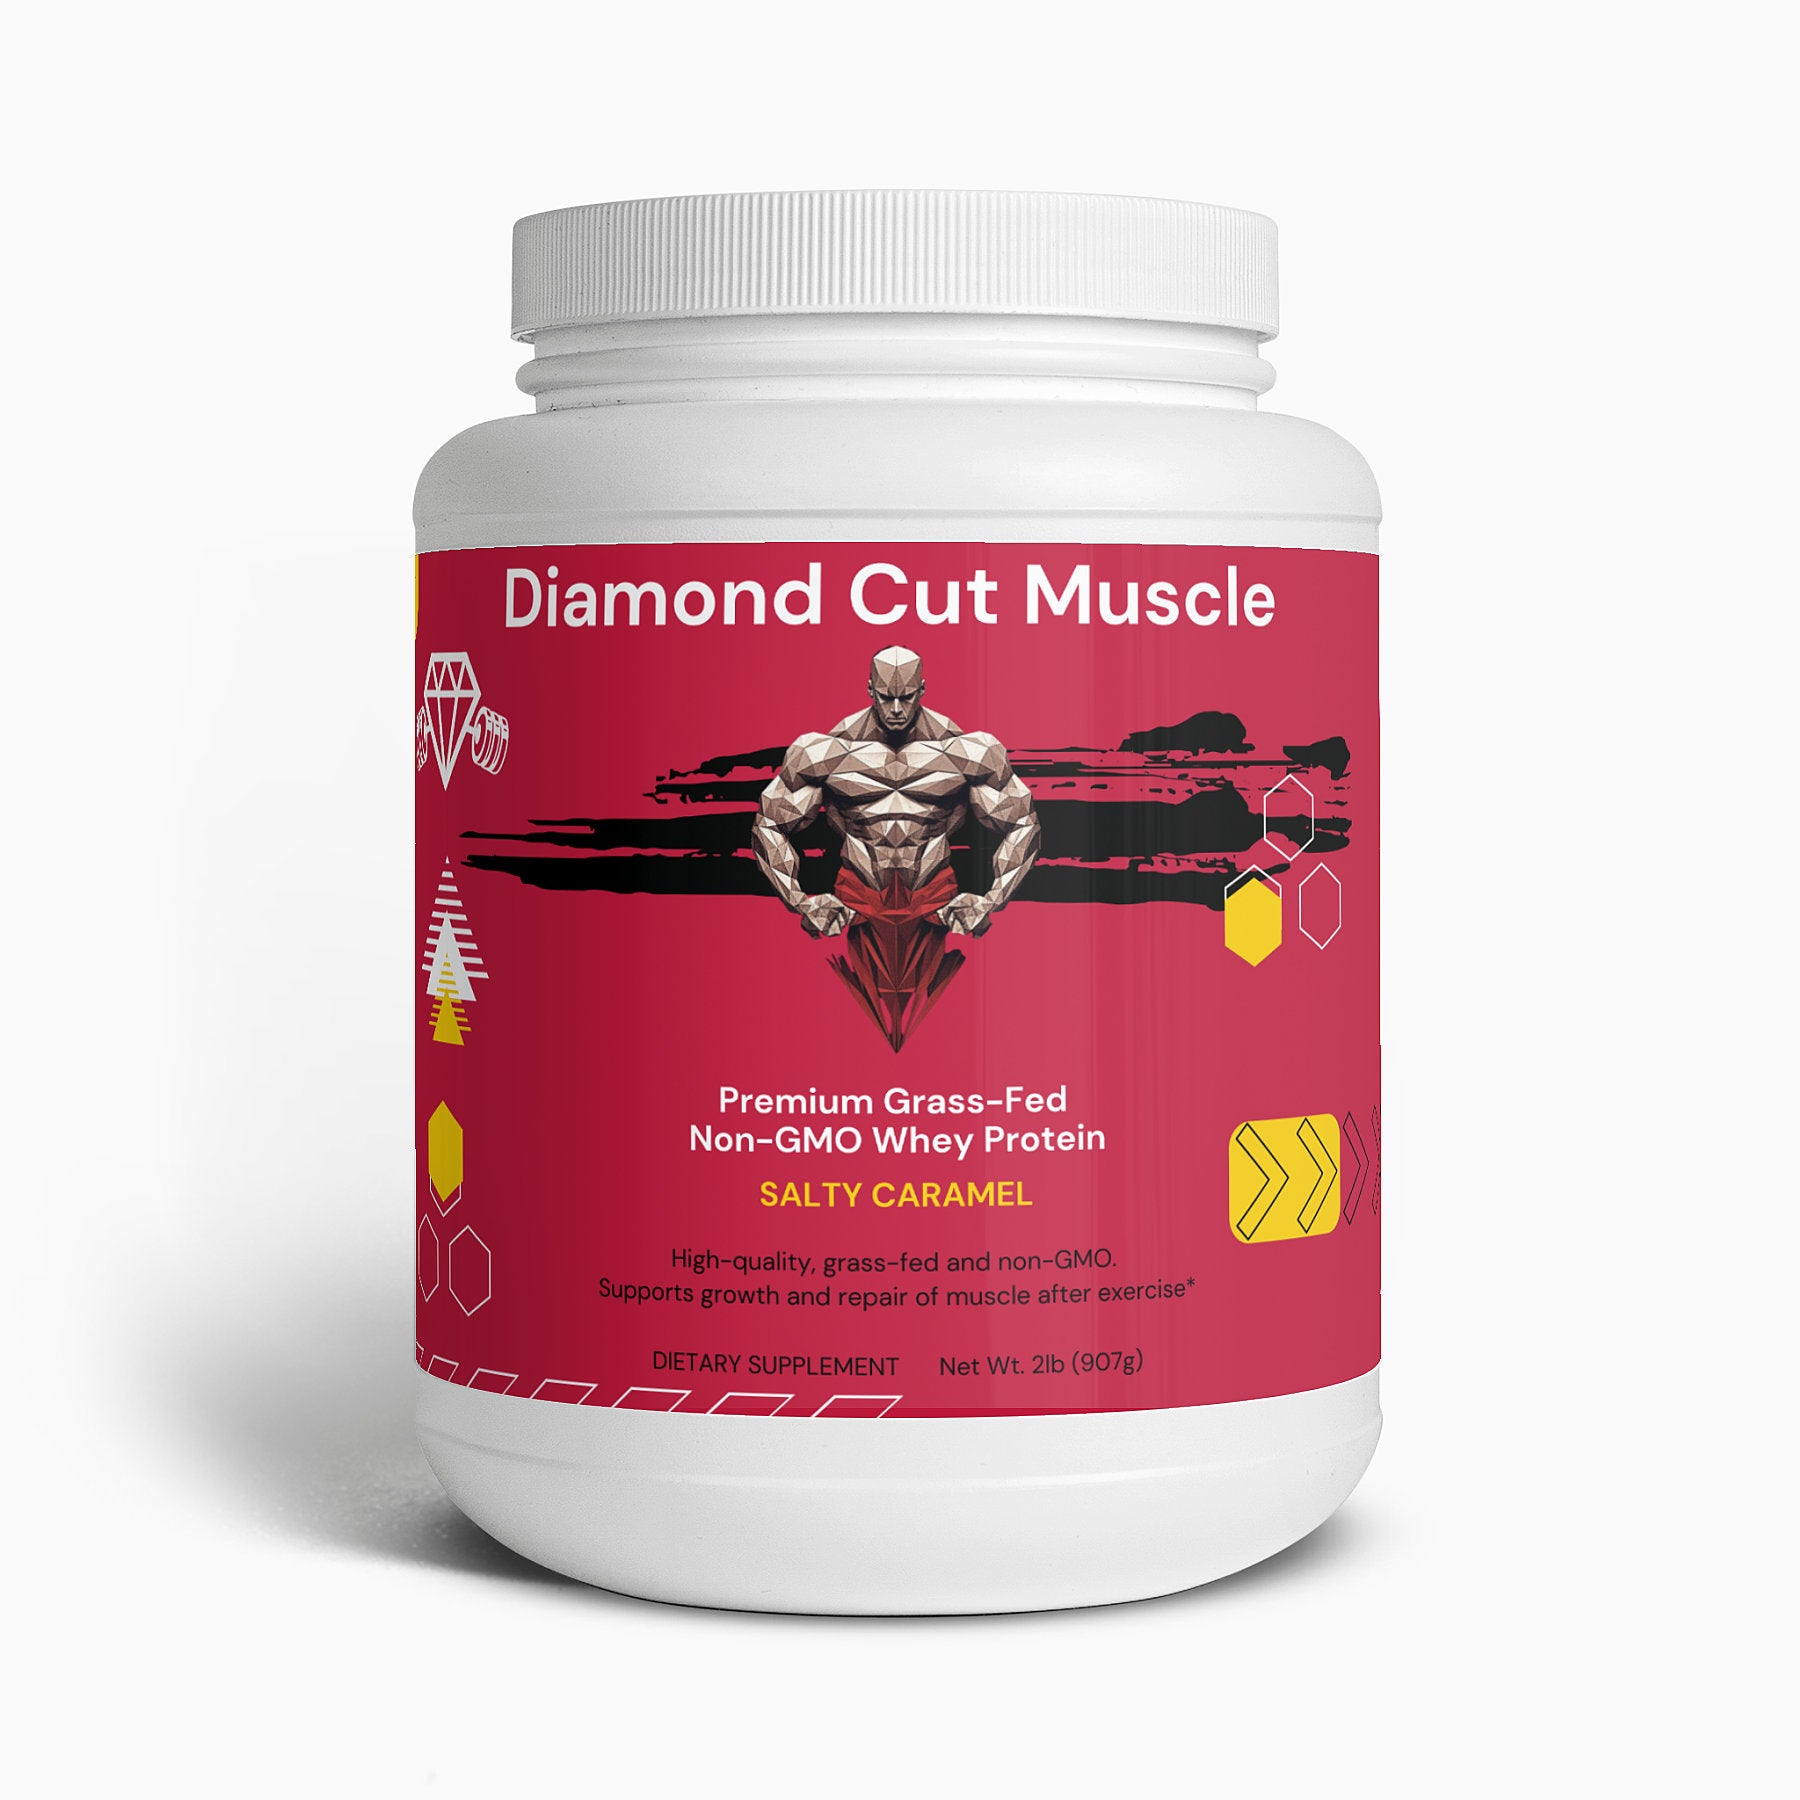 Diamond Cut Muscle's Premium Grass-Fed Non-GMO Whey Protein - Salty Caramel